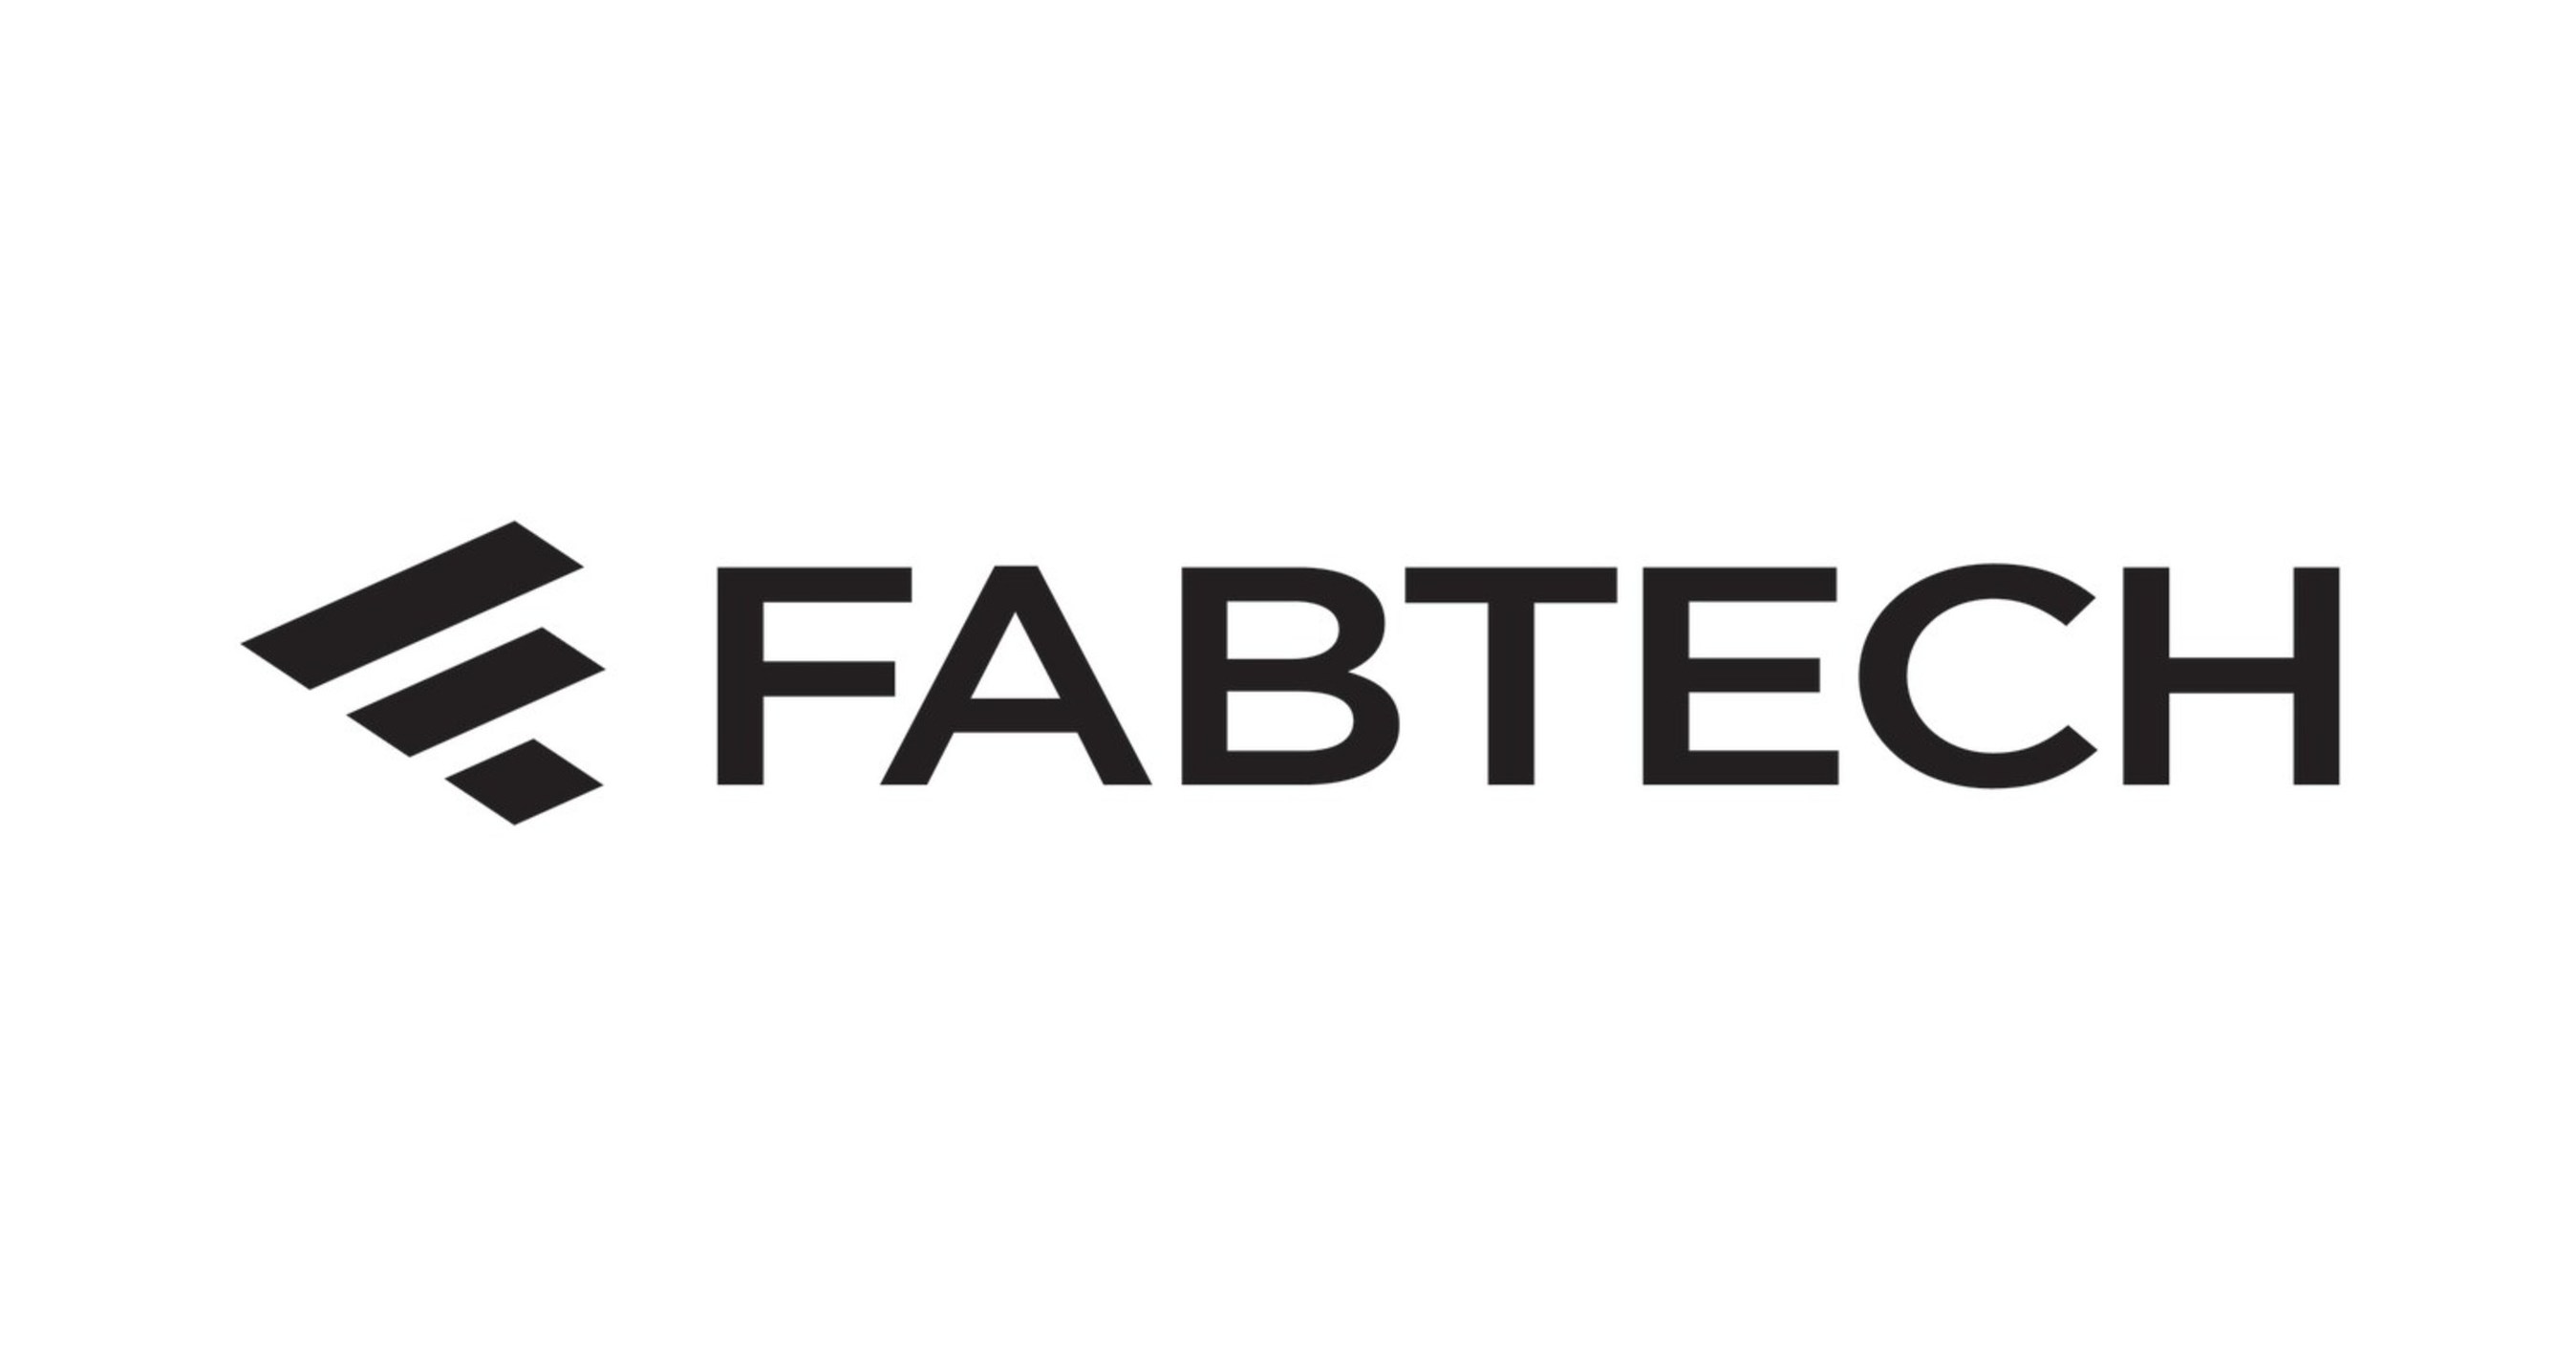 New FABTECH Logo Reflects an Industry Evolution